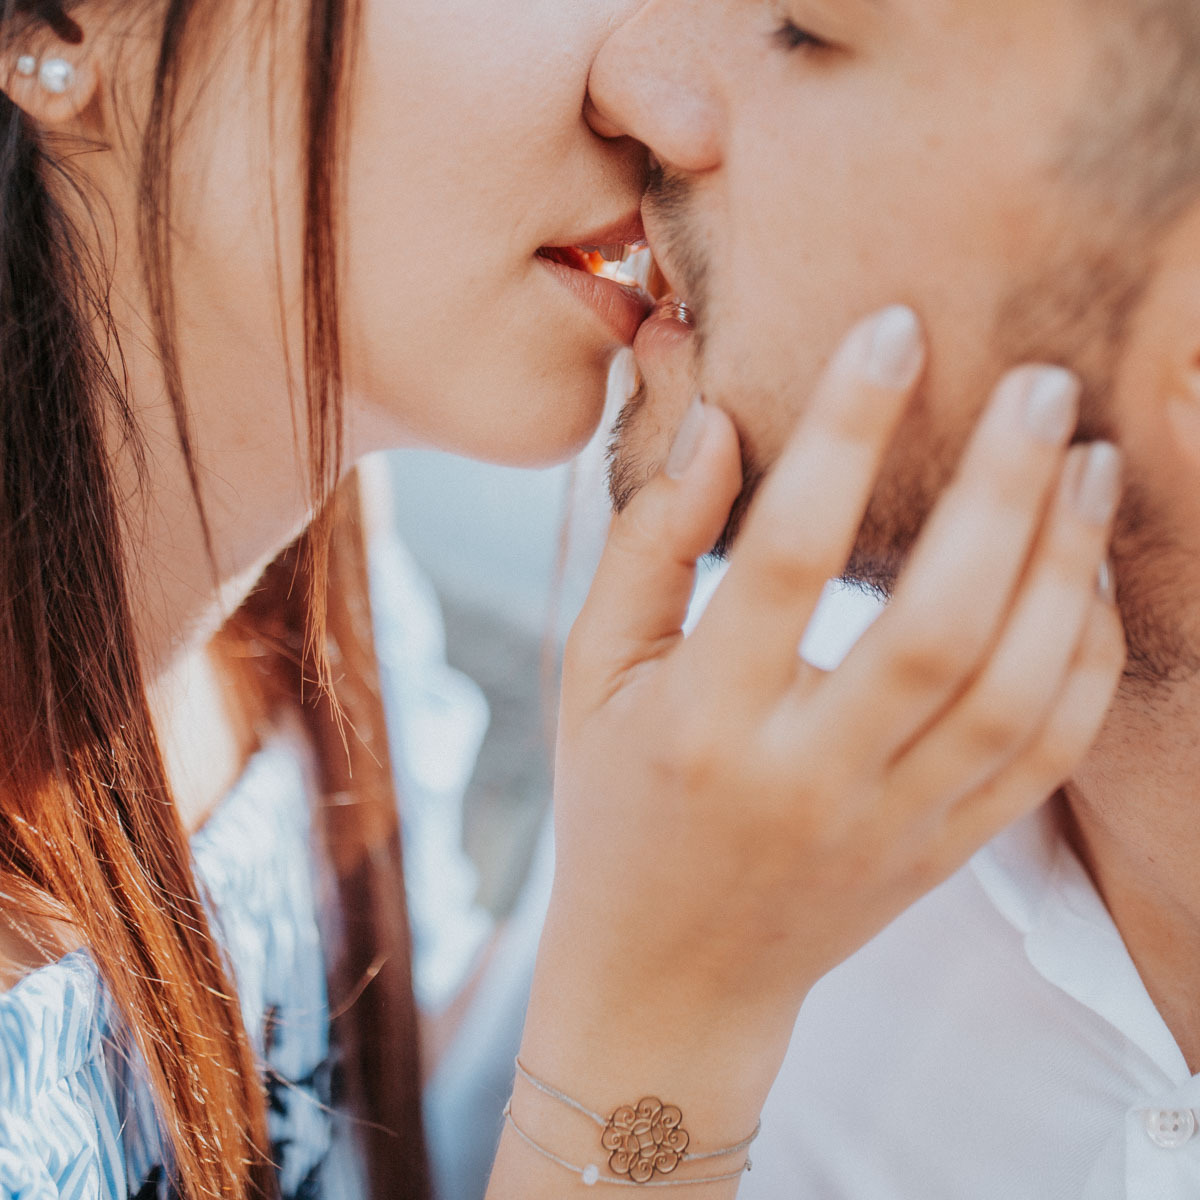 intimate couple, romantic kiss, close-up, expressive lifestyle portrait photoshoot :: photo copyright Karin Bergmann